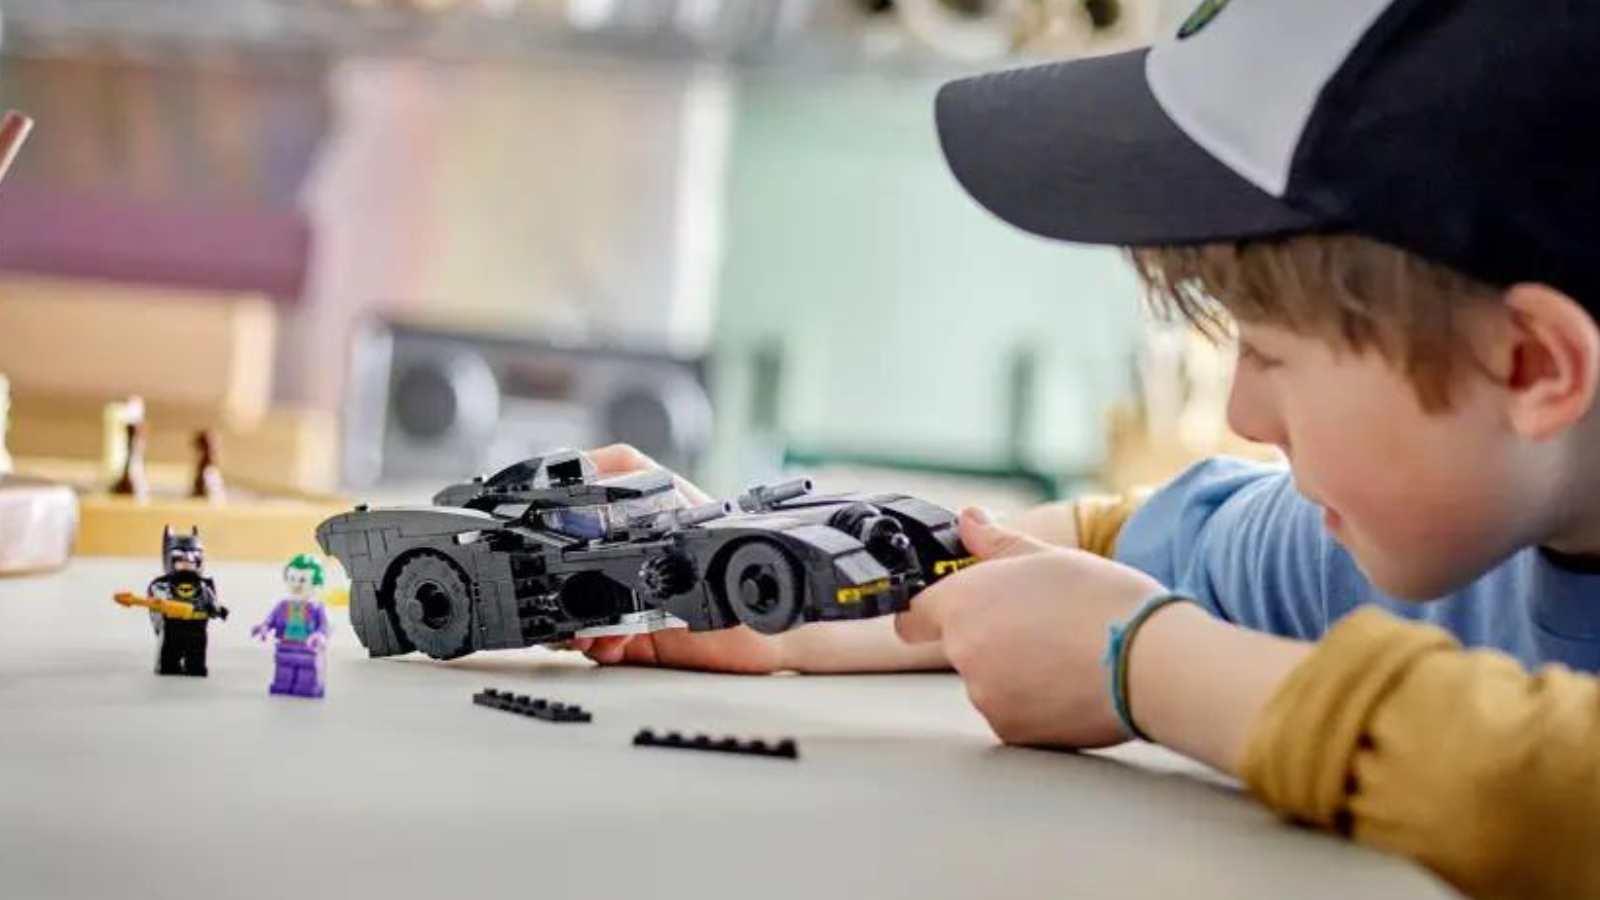 A child with their LEGO Batmobile: Batman vs. The Joker Chase set